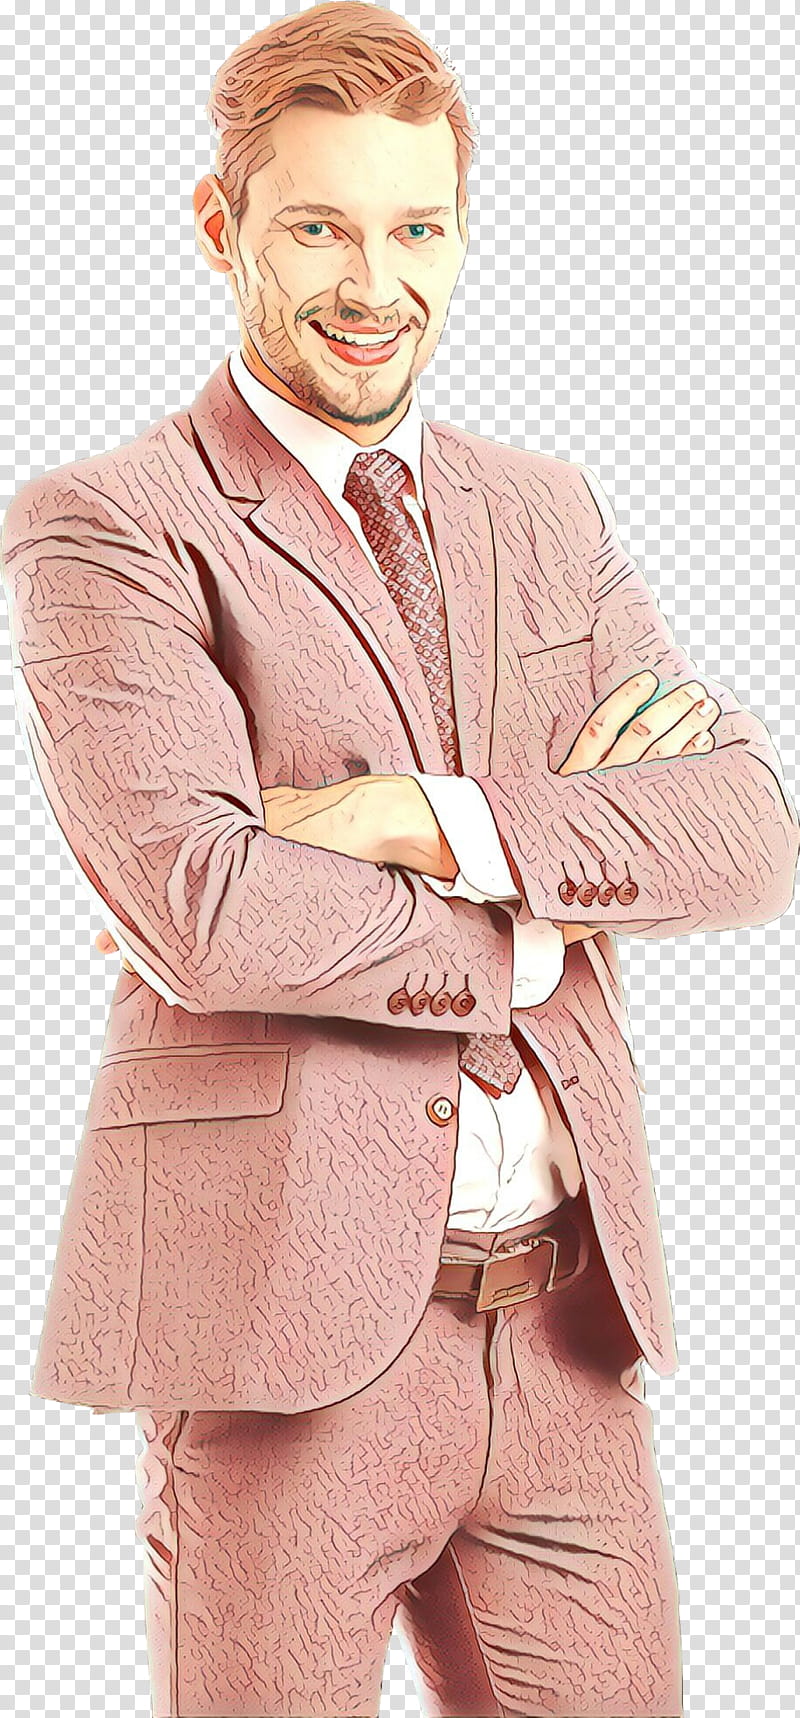 clothing outerwear pink suit standing, Cartoon, Blazer, Gentleman, Jacket, Beige, Coat transparent background PNG clipart